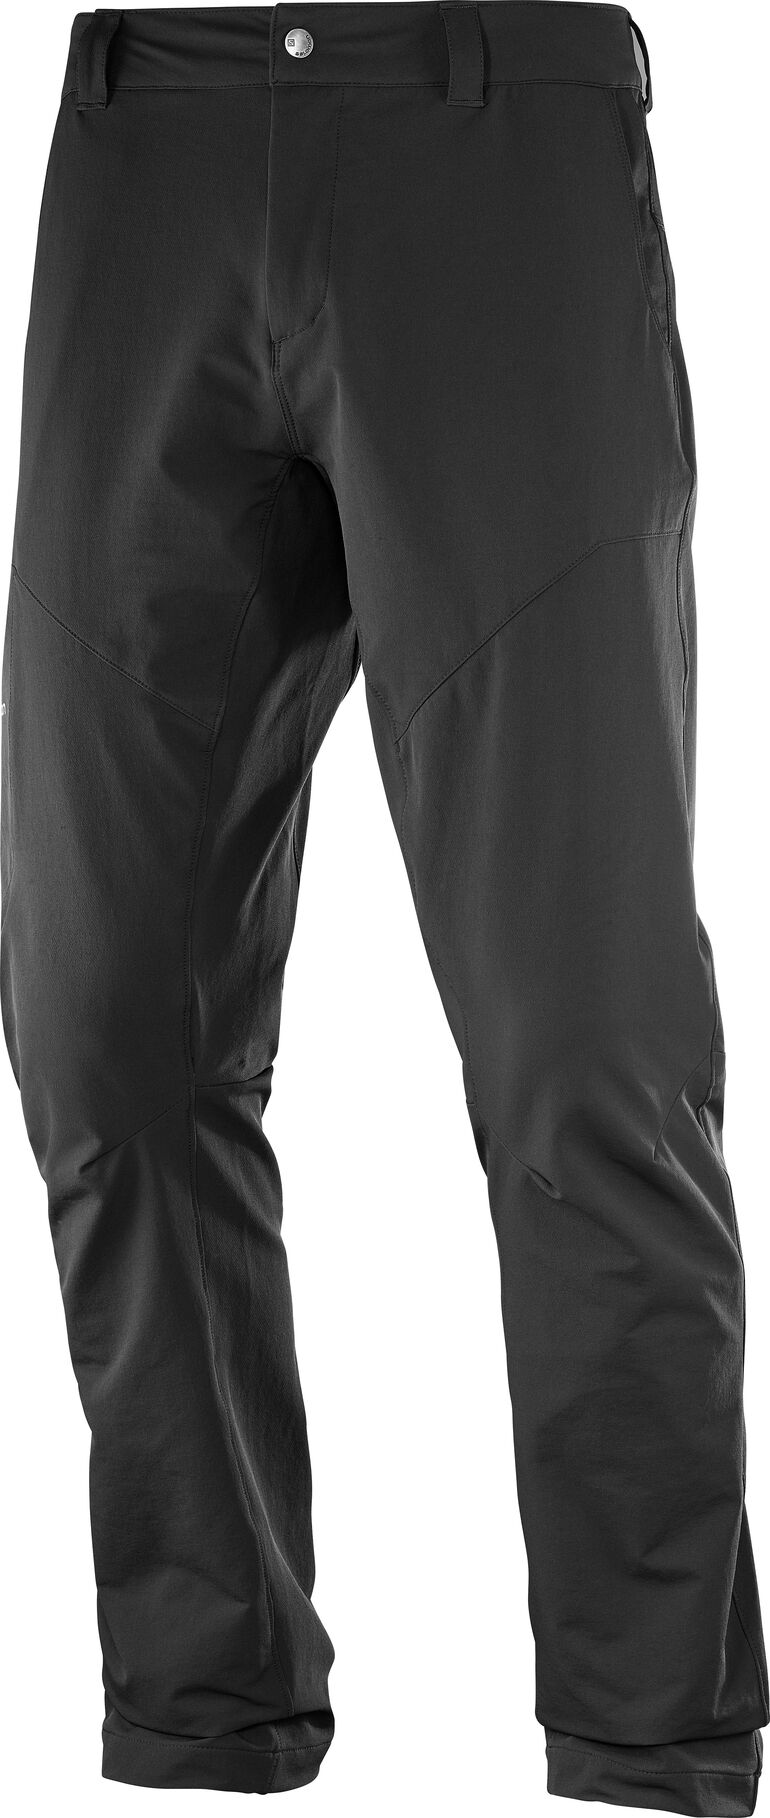 Salomon - Wayfarer Utility Pant M - Trekking trousers - Men's